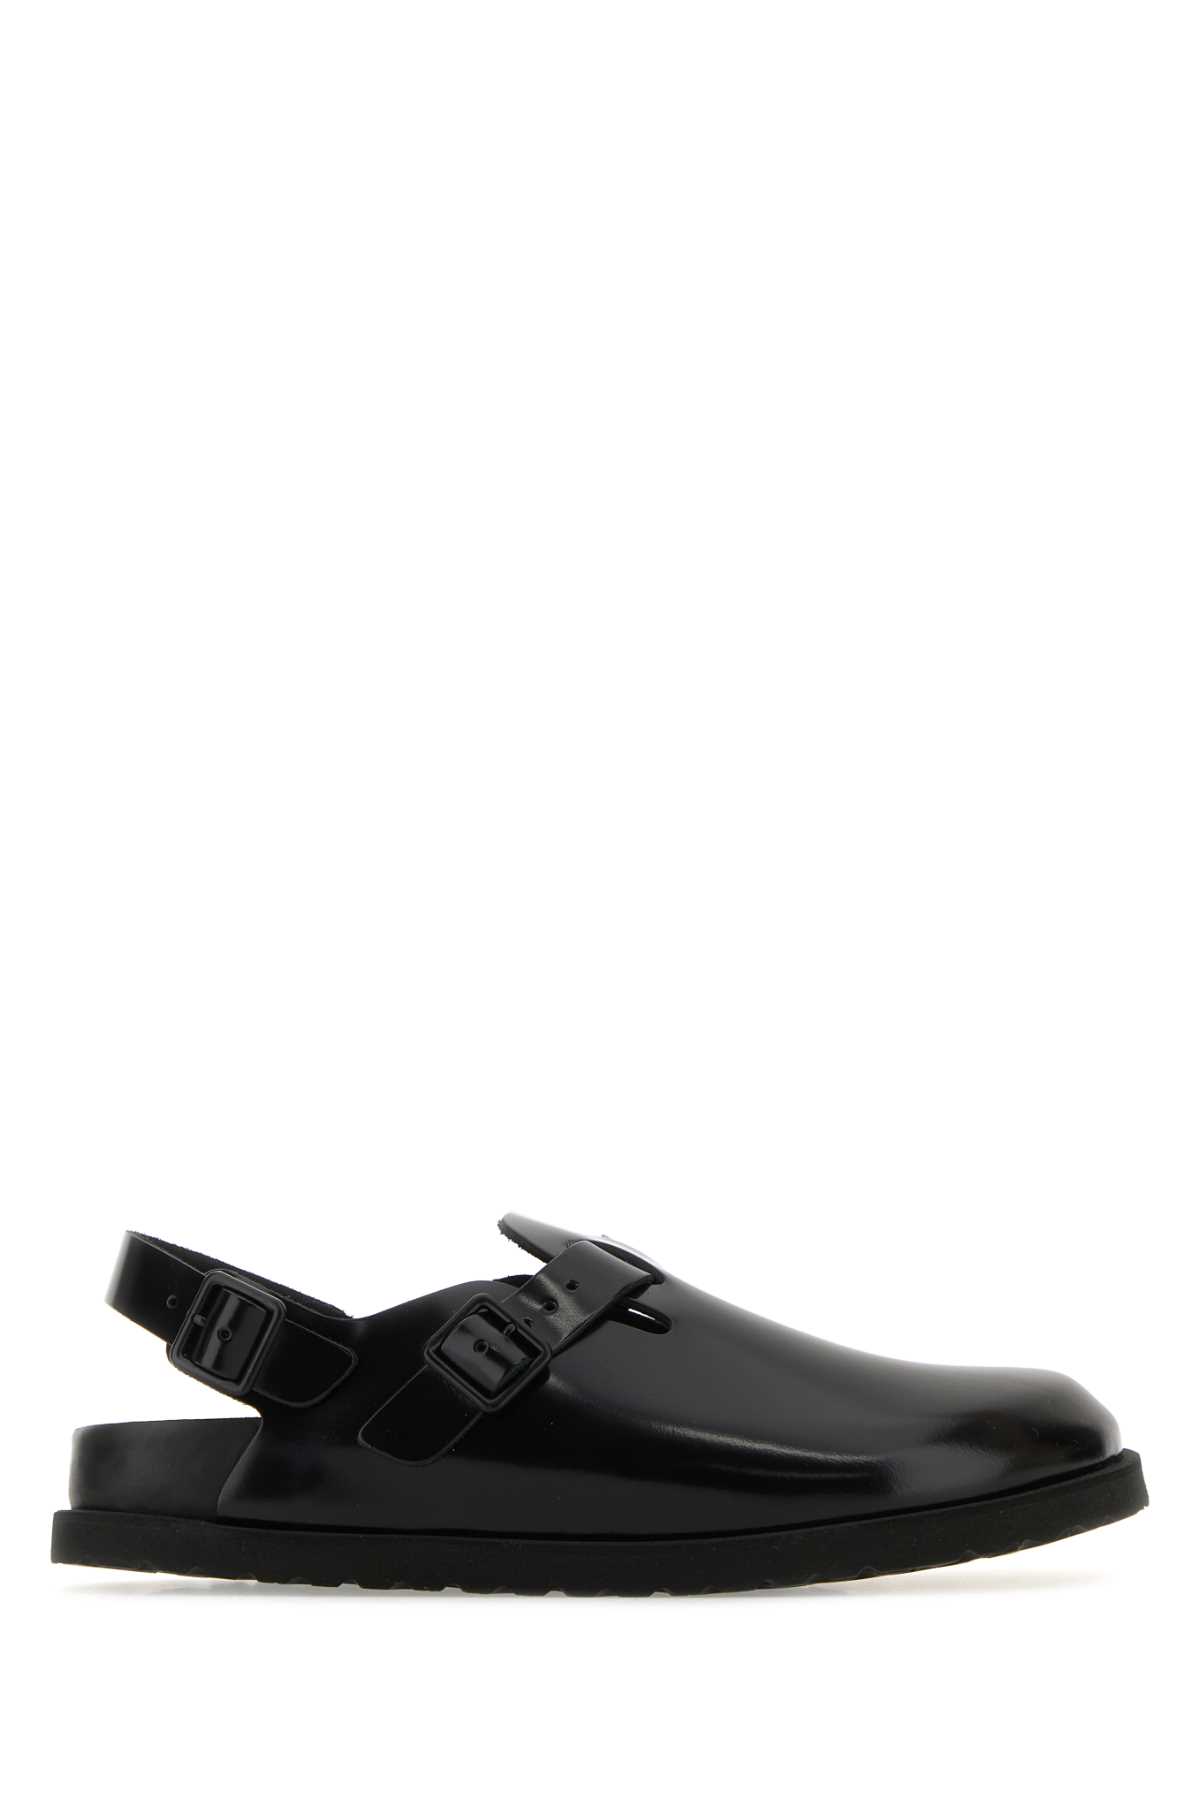 Black Leather Tokio Slippers